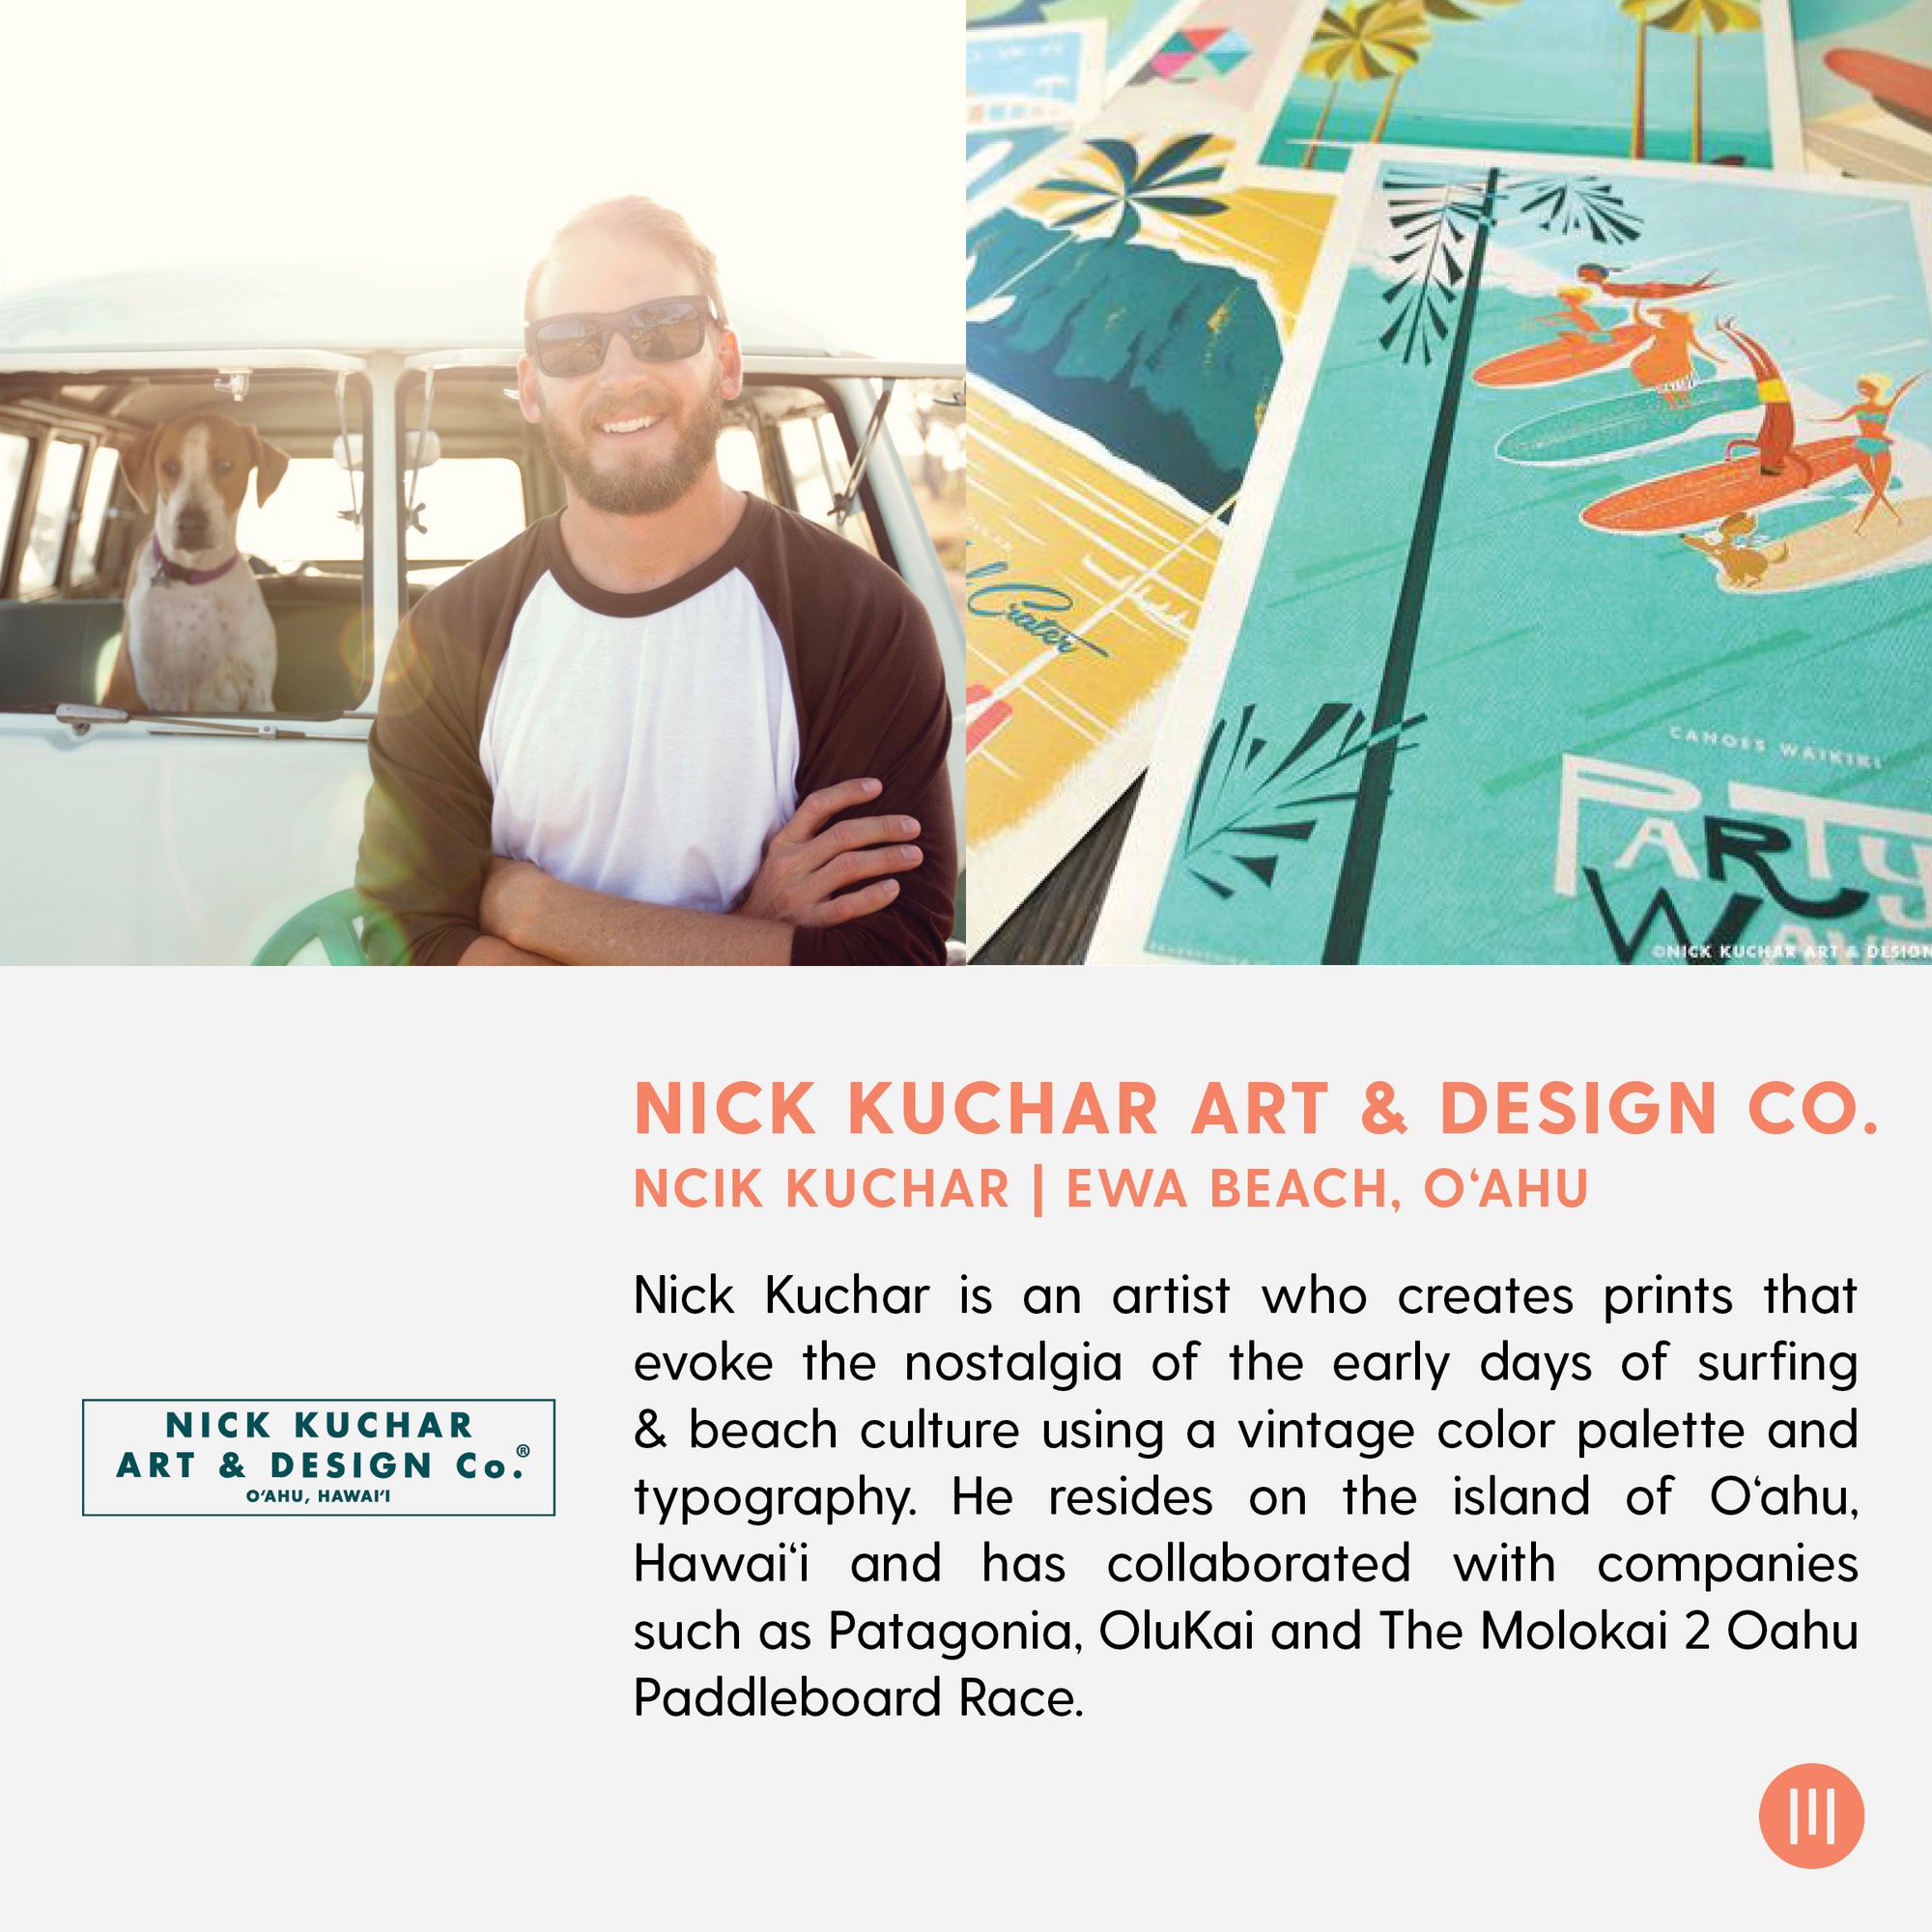 Nick Kuchar Travel Poster - Canoes Waikiki "Party Wave"